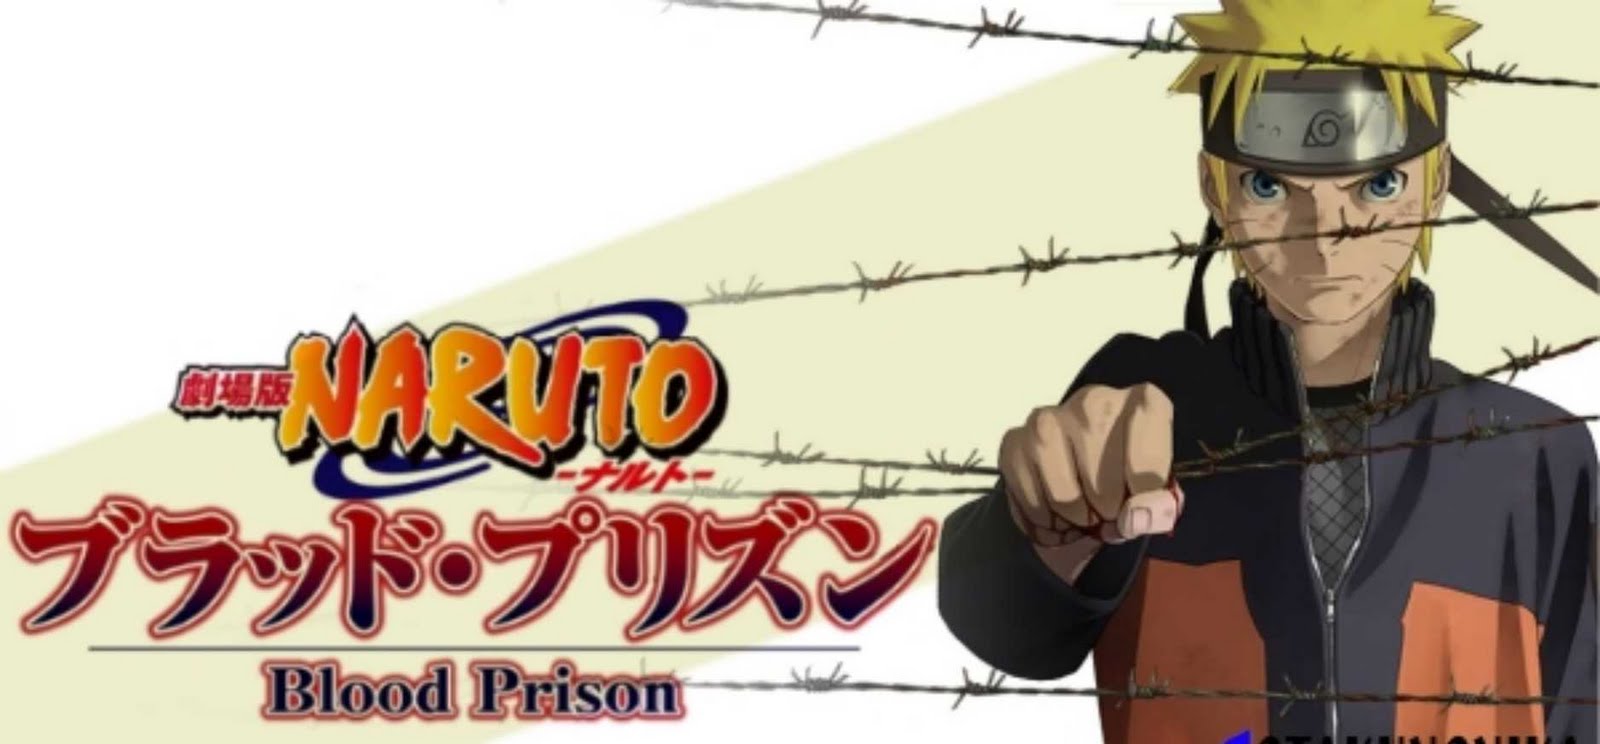 naruto blood prison full movie english sub